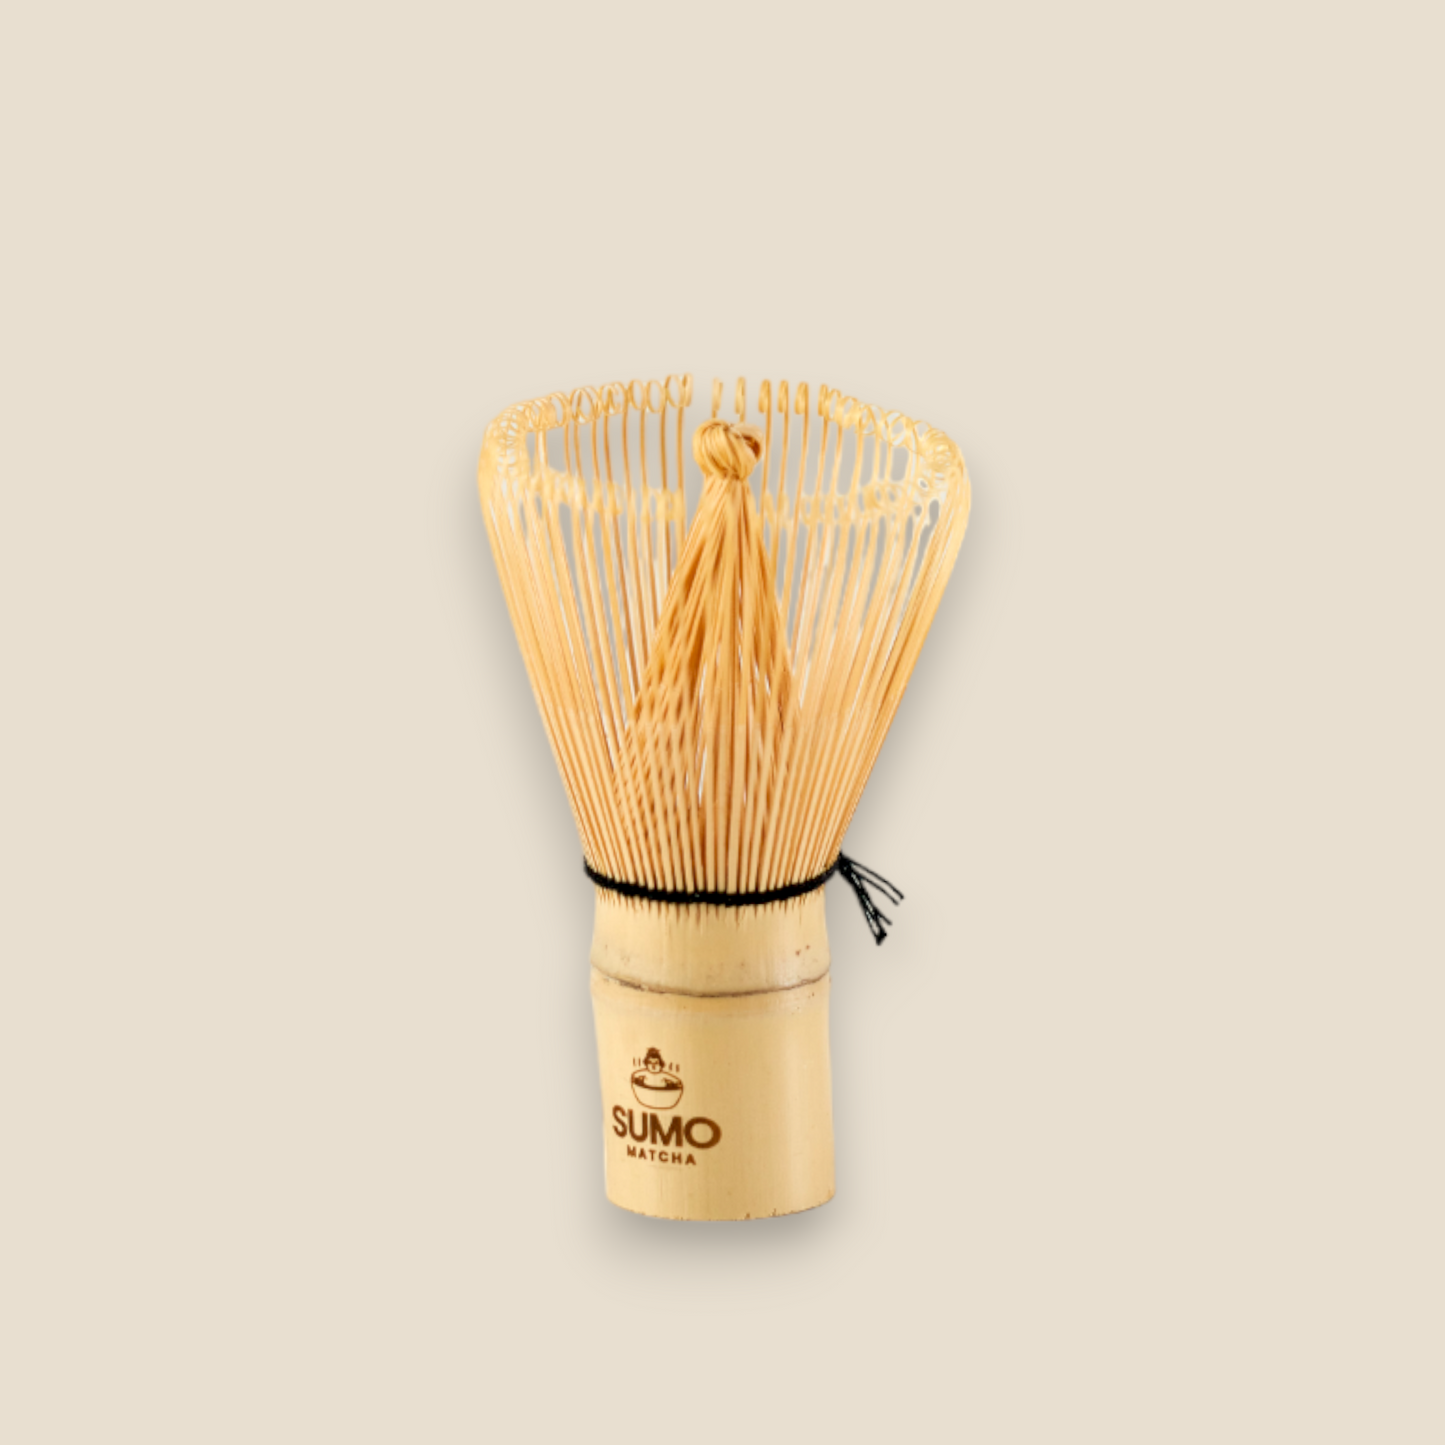 Bamboo matcha whisk (Chasen)